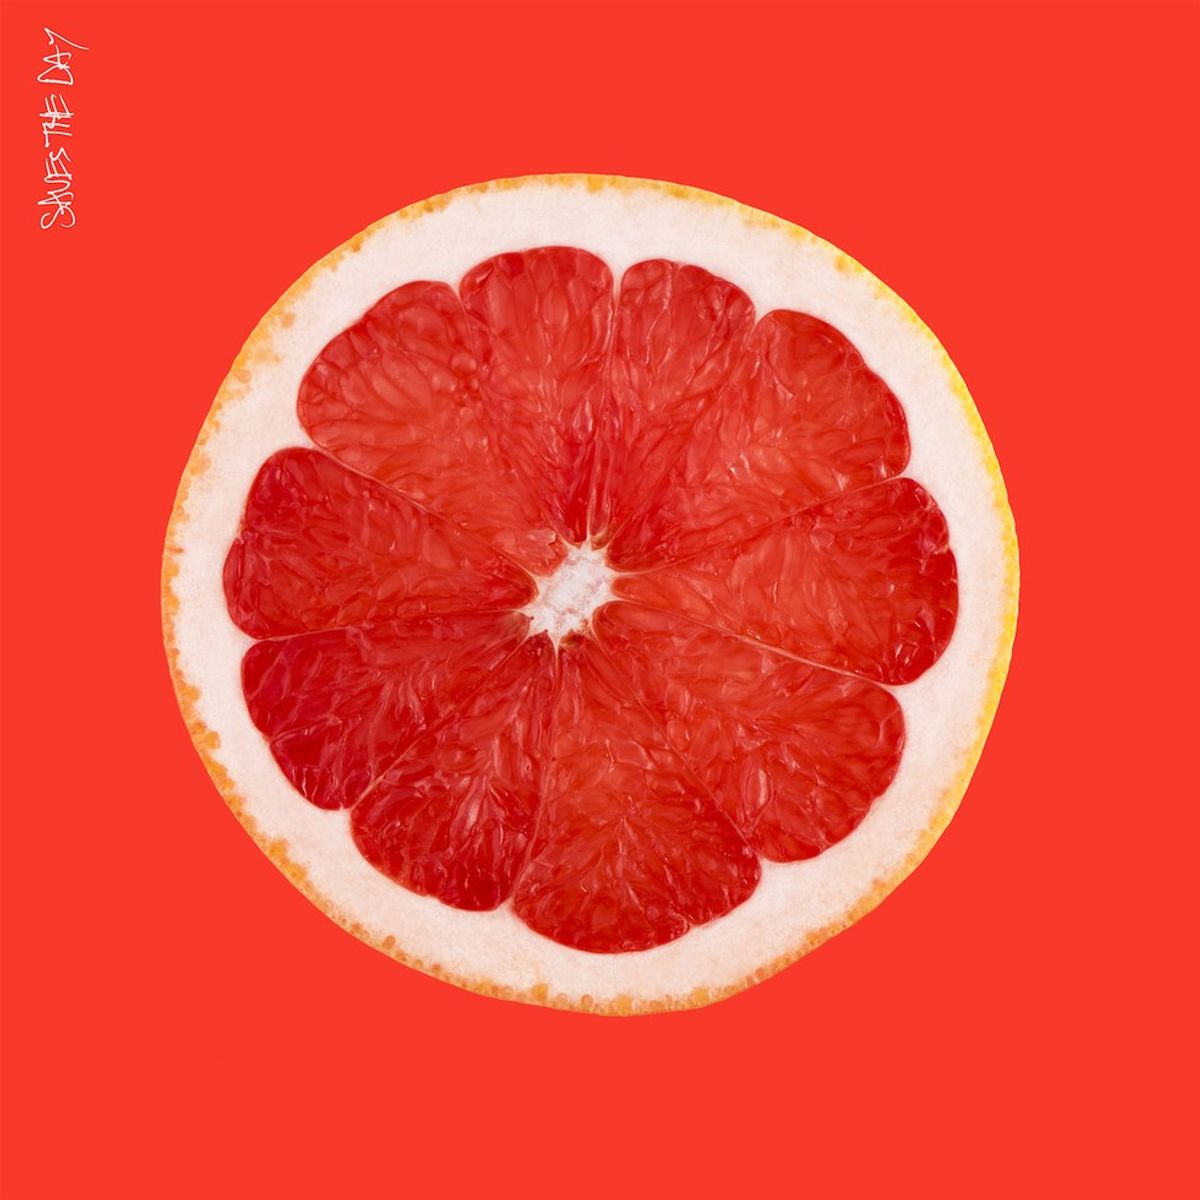 11 Ways 'Grapefruit' Saves The Day